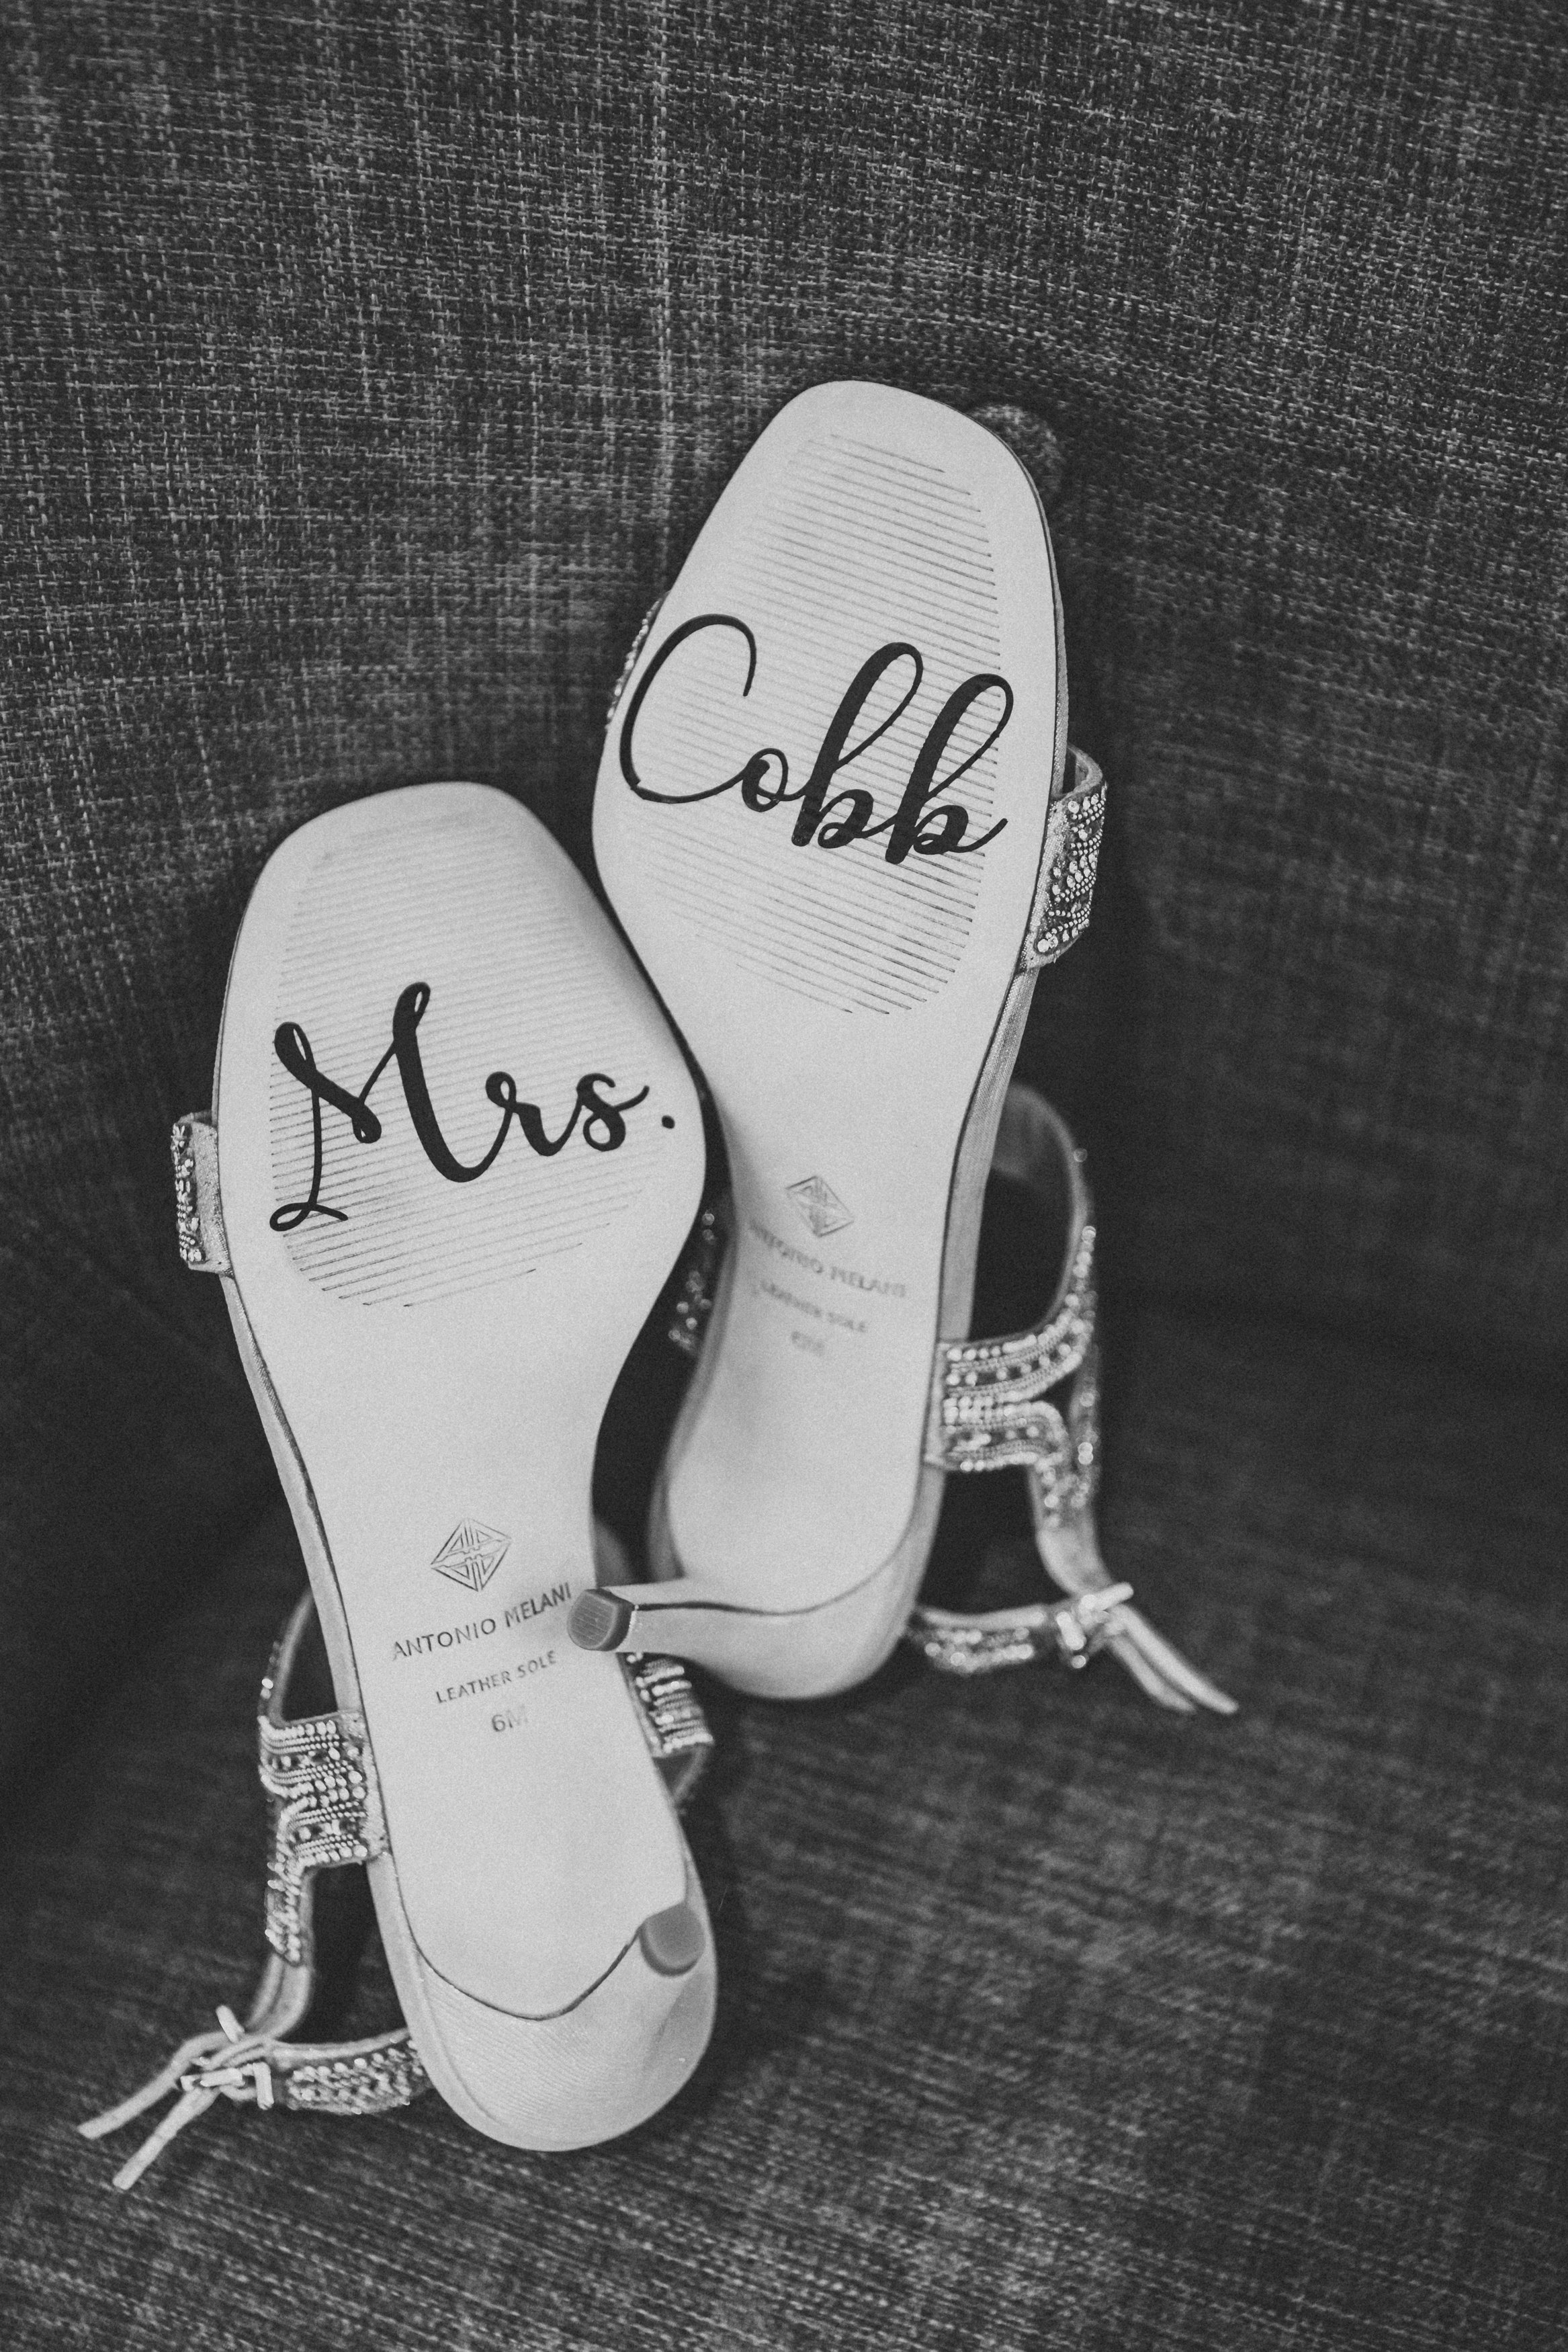 Mrs. Cobb wedding shoes